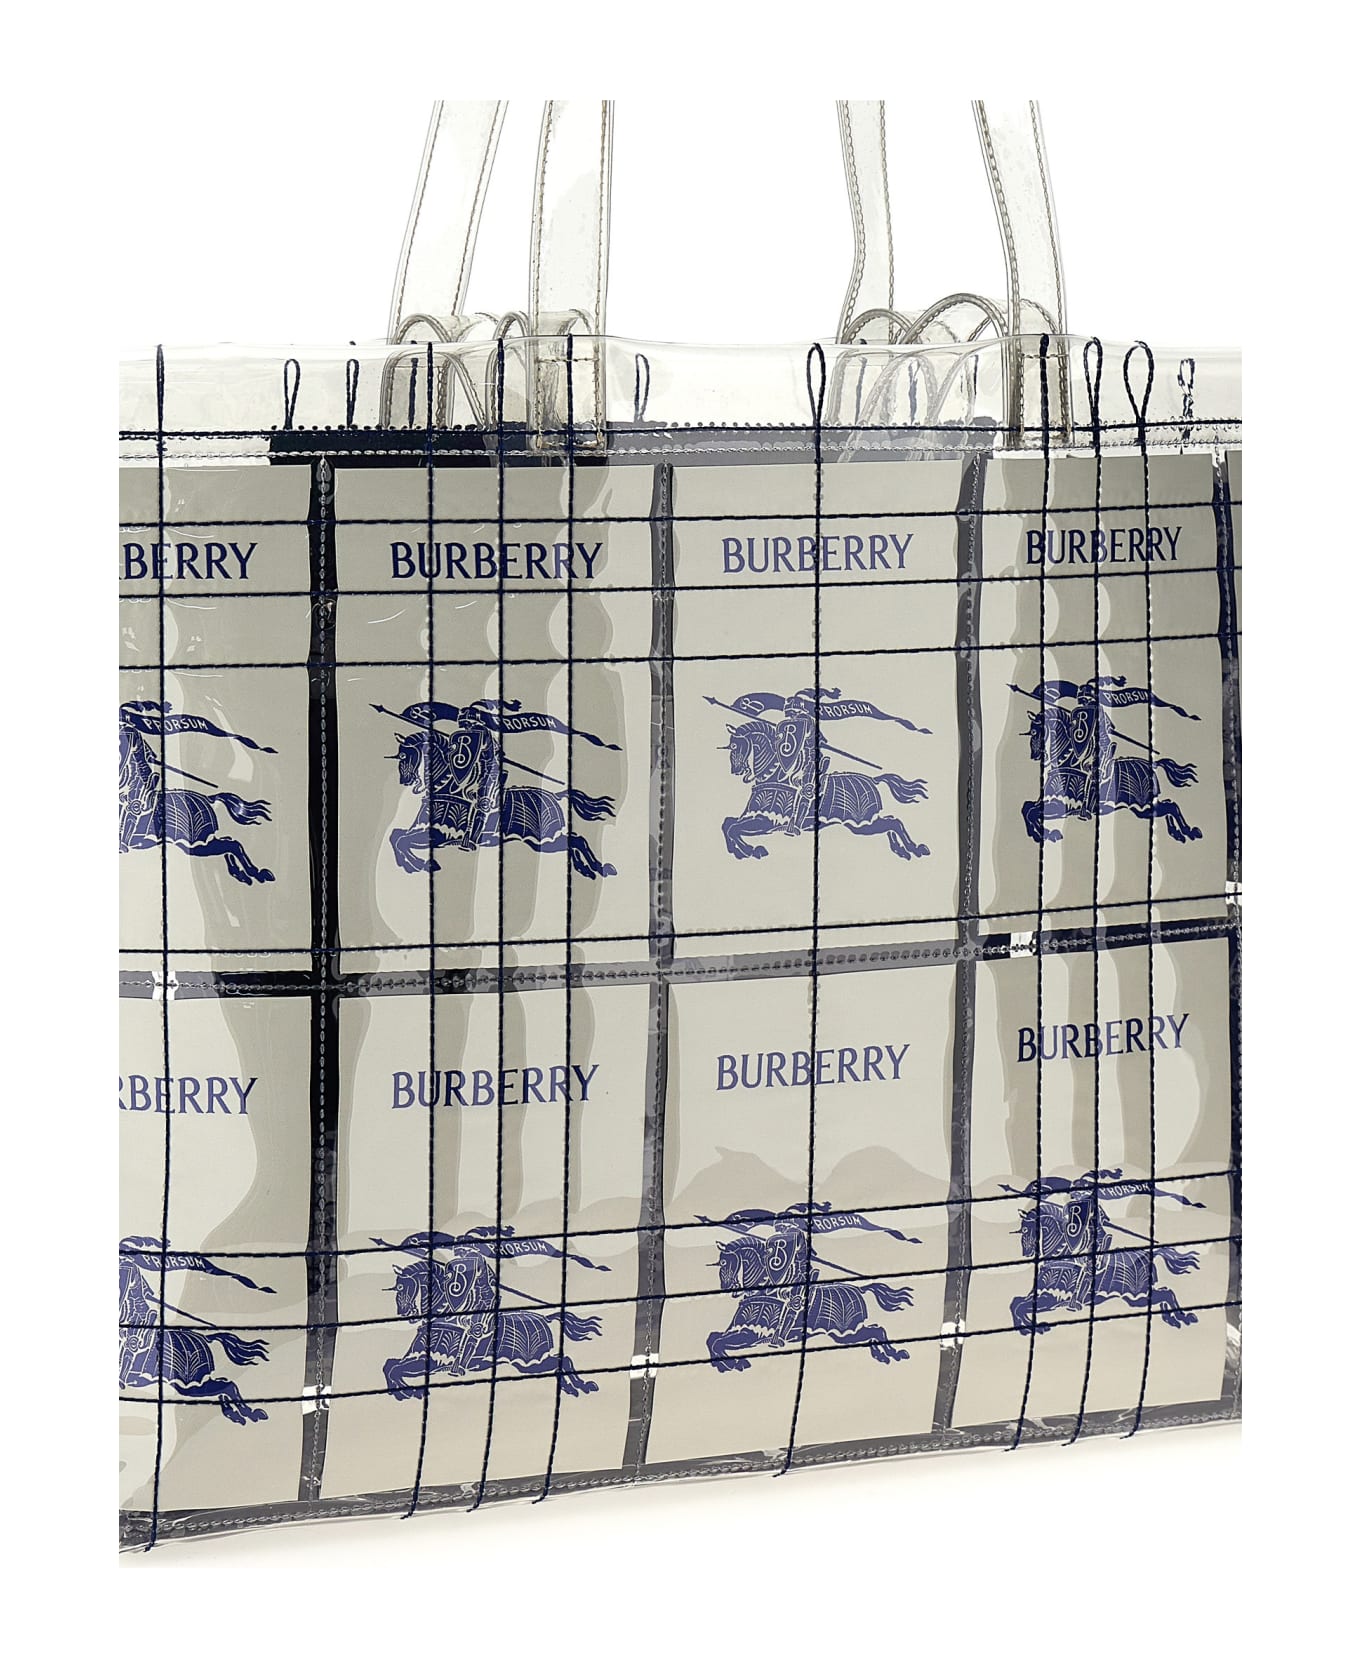 Burberry 'ekd' Label Shopping Bag - Multicolor